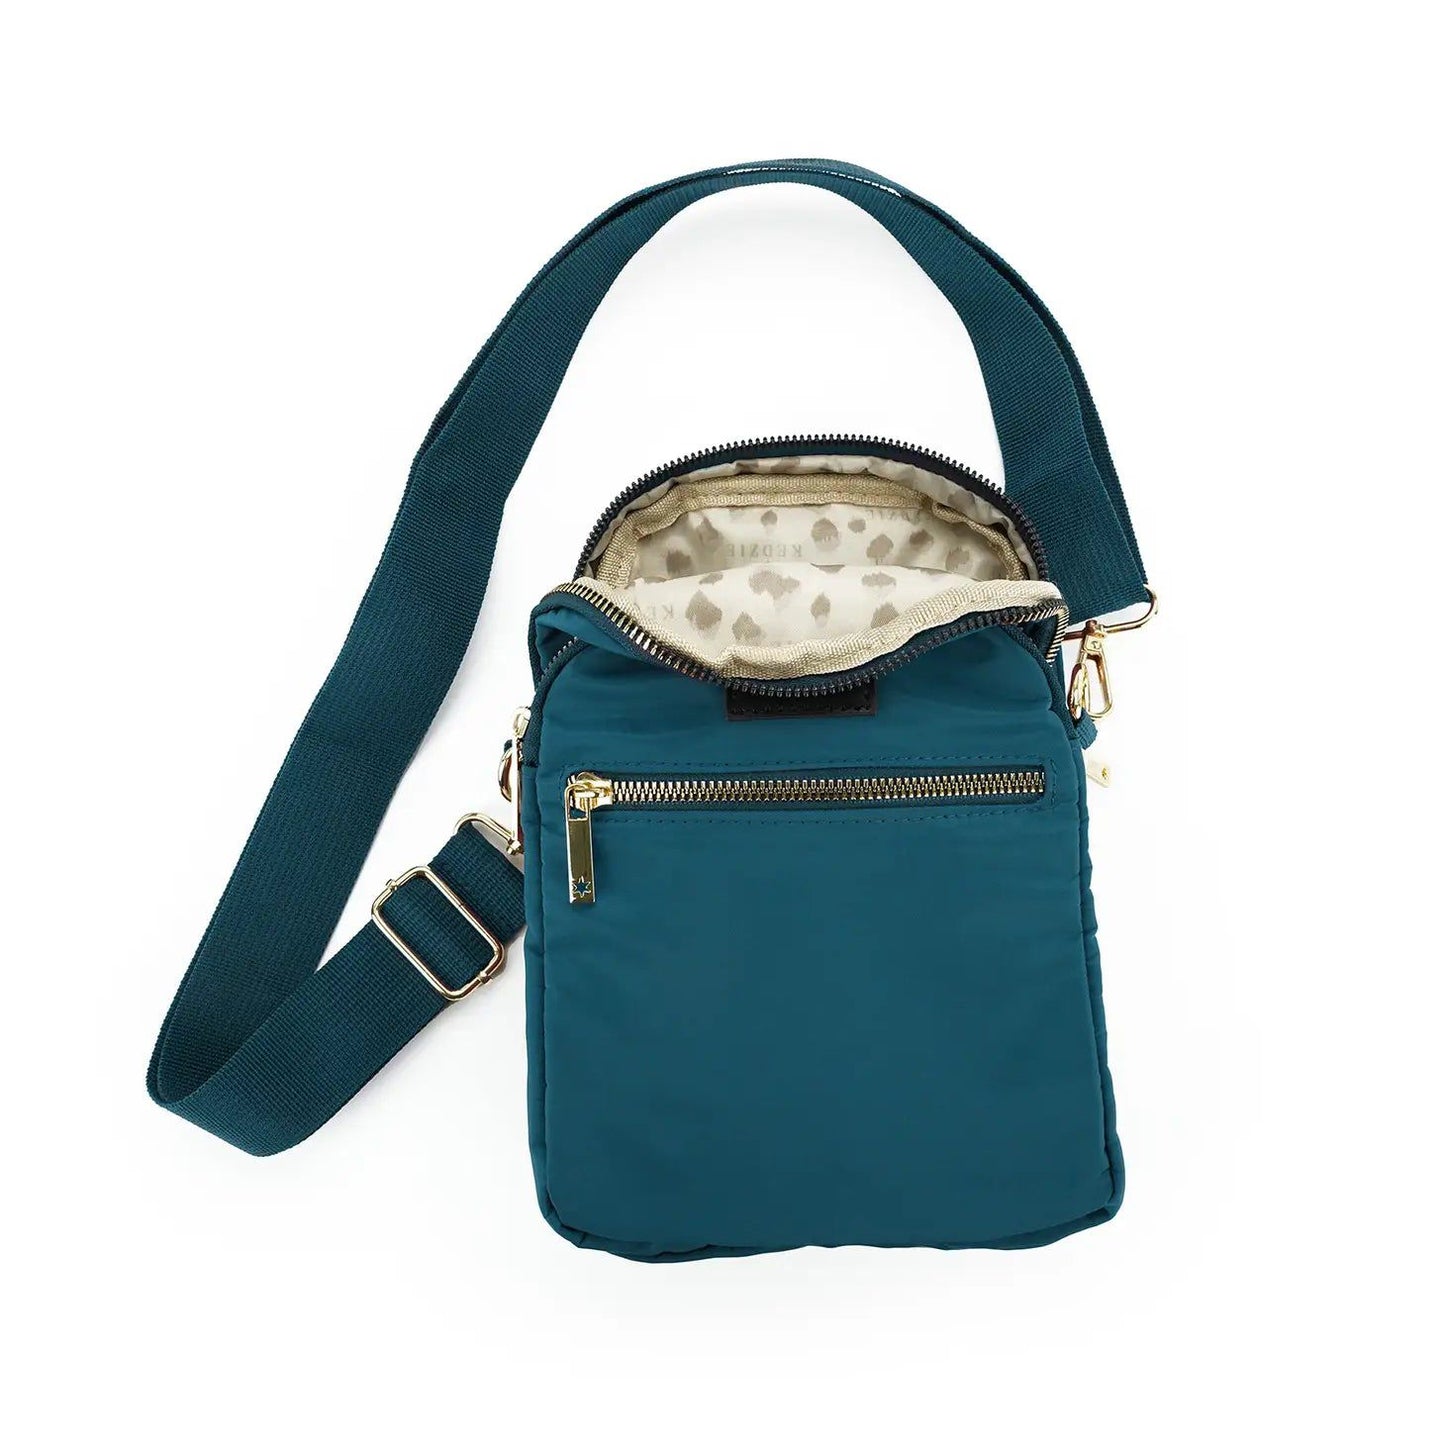 Kedzie Roundtrip Convertible Sling Bag-accessories > Apparel & Accessories > Handbags, Wallets & Cases > Handbags-Wine-Quinn's Mercantile